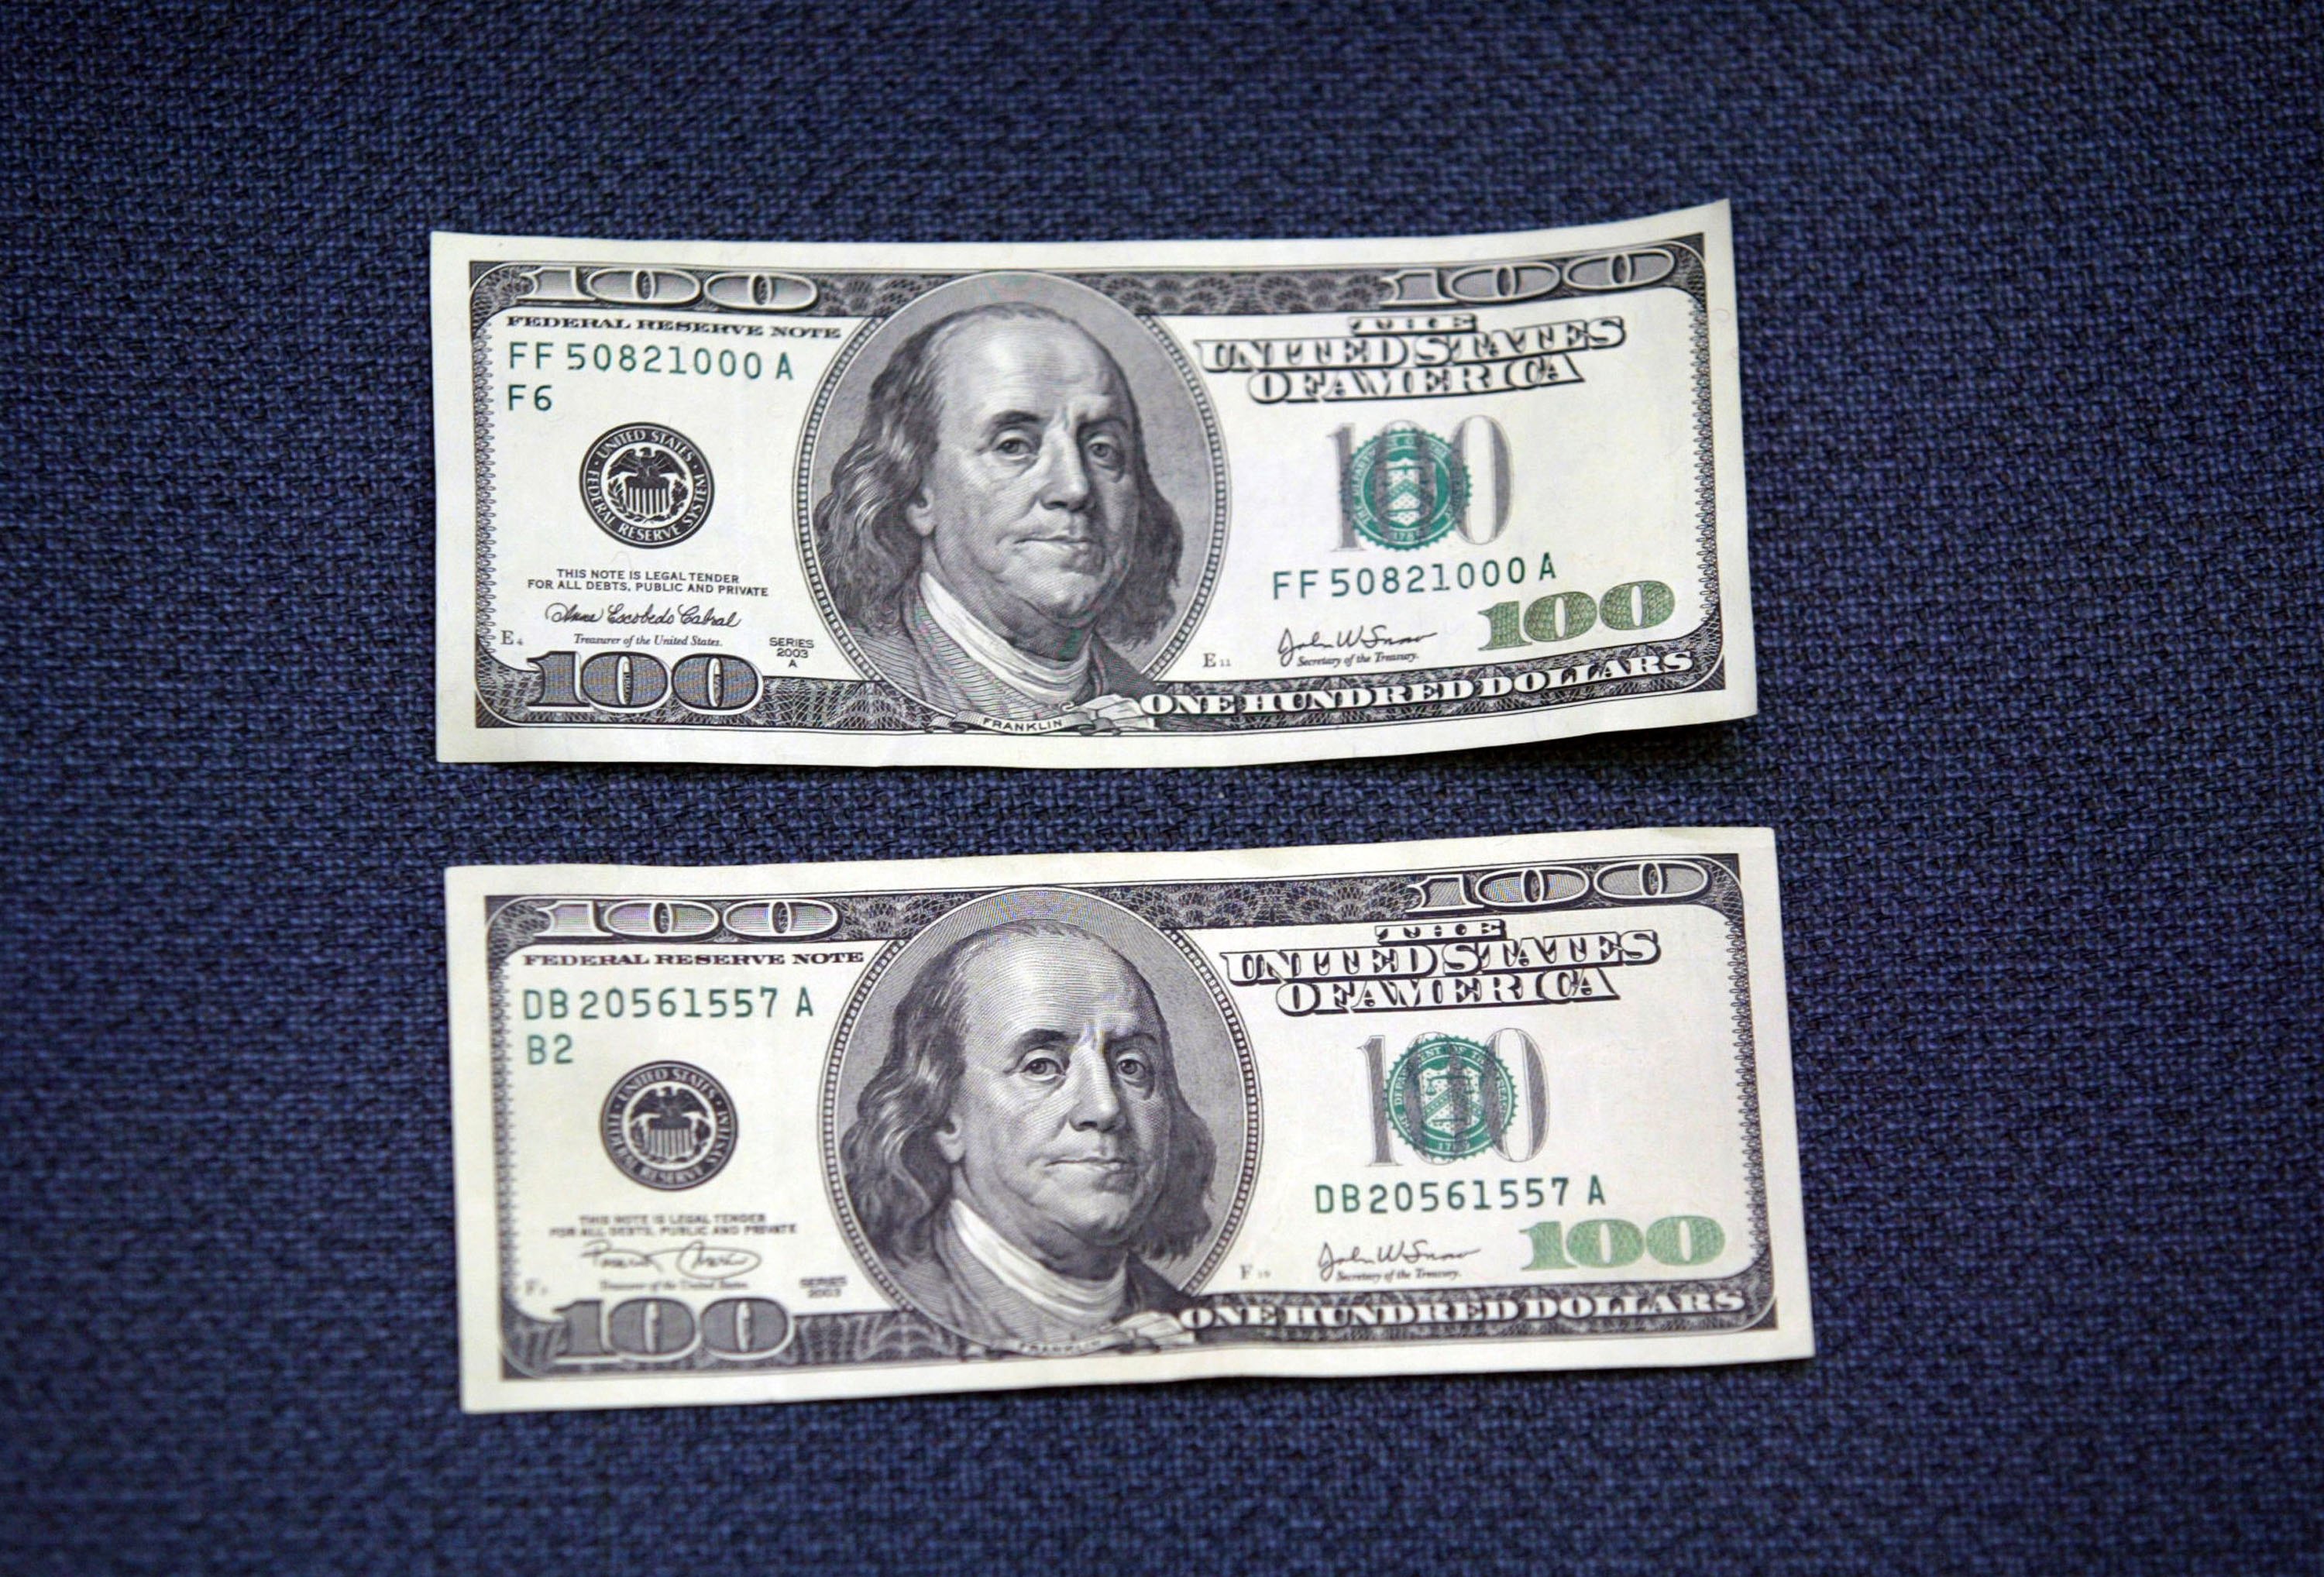 Police Warn of Counterfeit Cash After $1M of 'Movie Money' Stolen